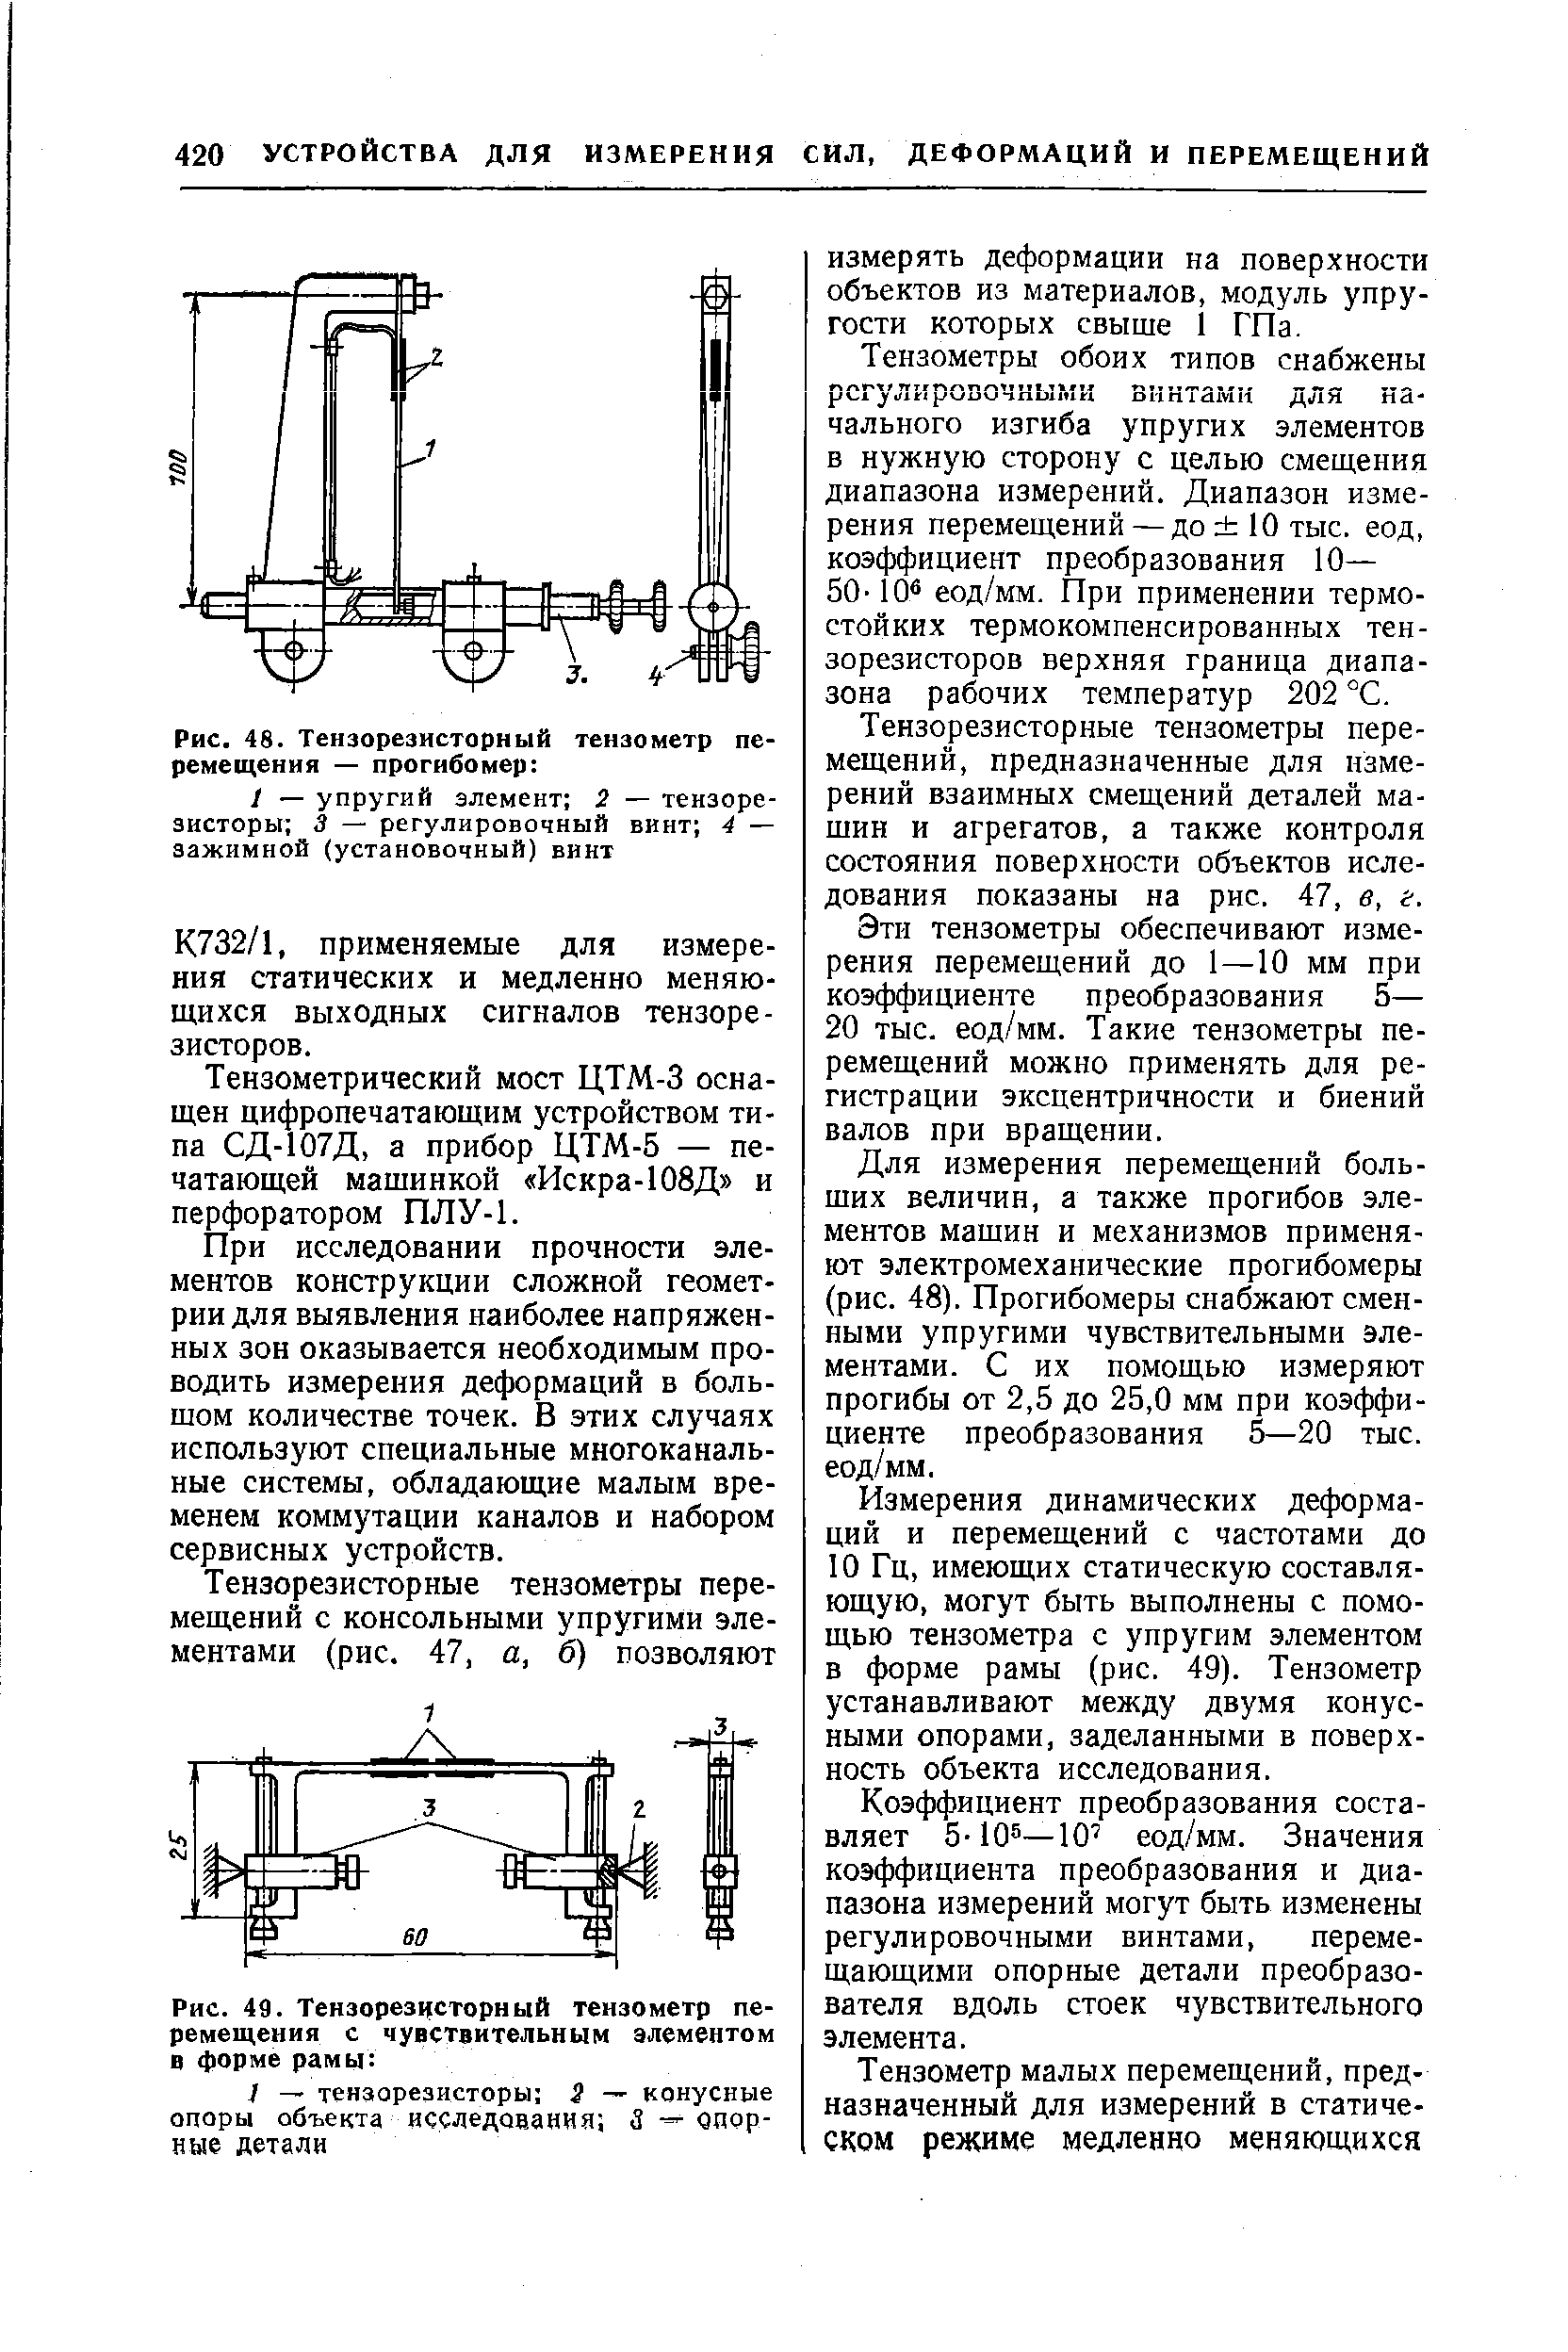 Рис. 48. Тензорезисторный тензометр перемещения — прогибомер 
